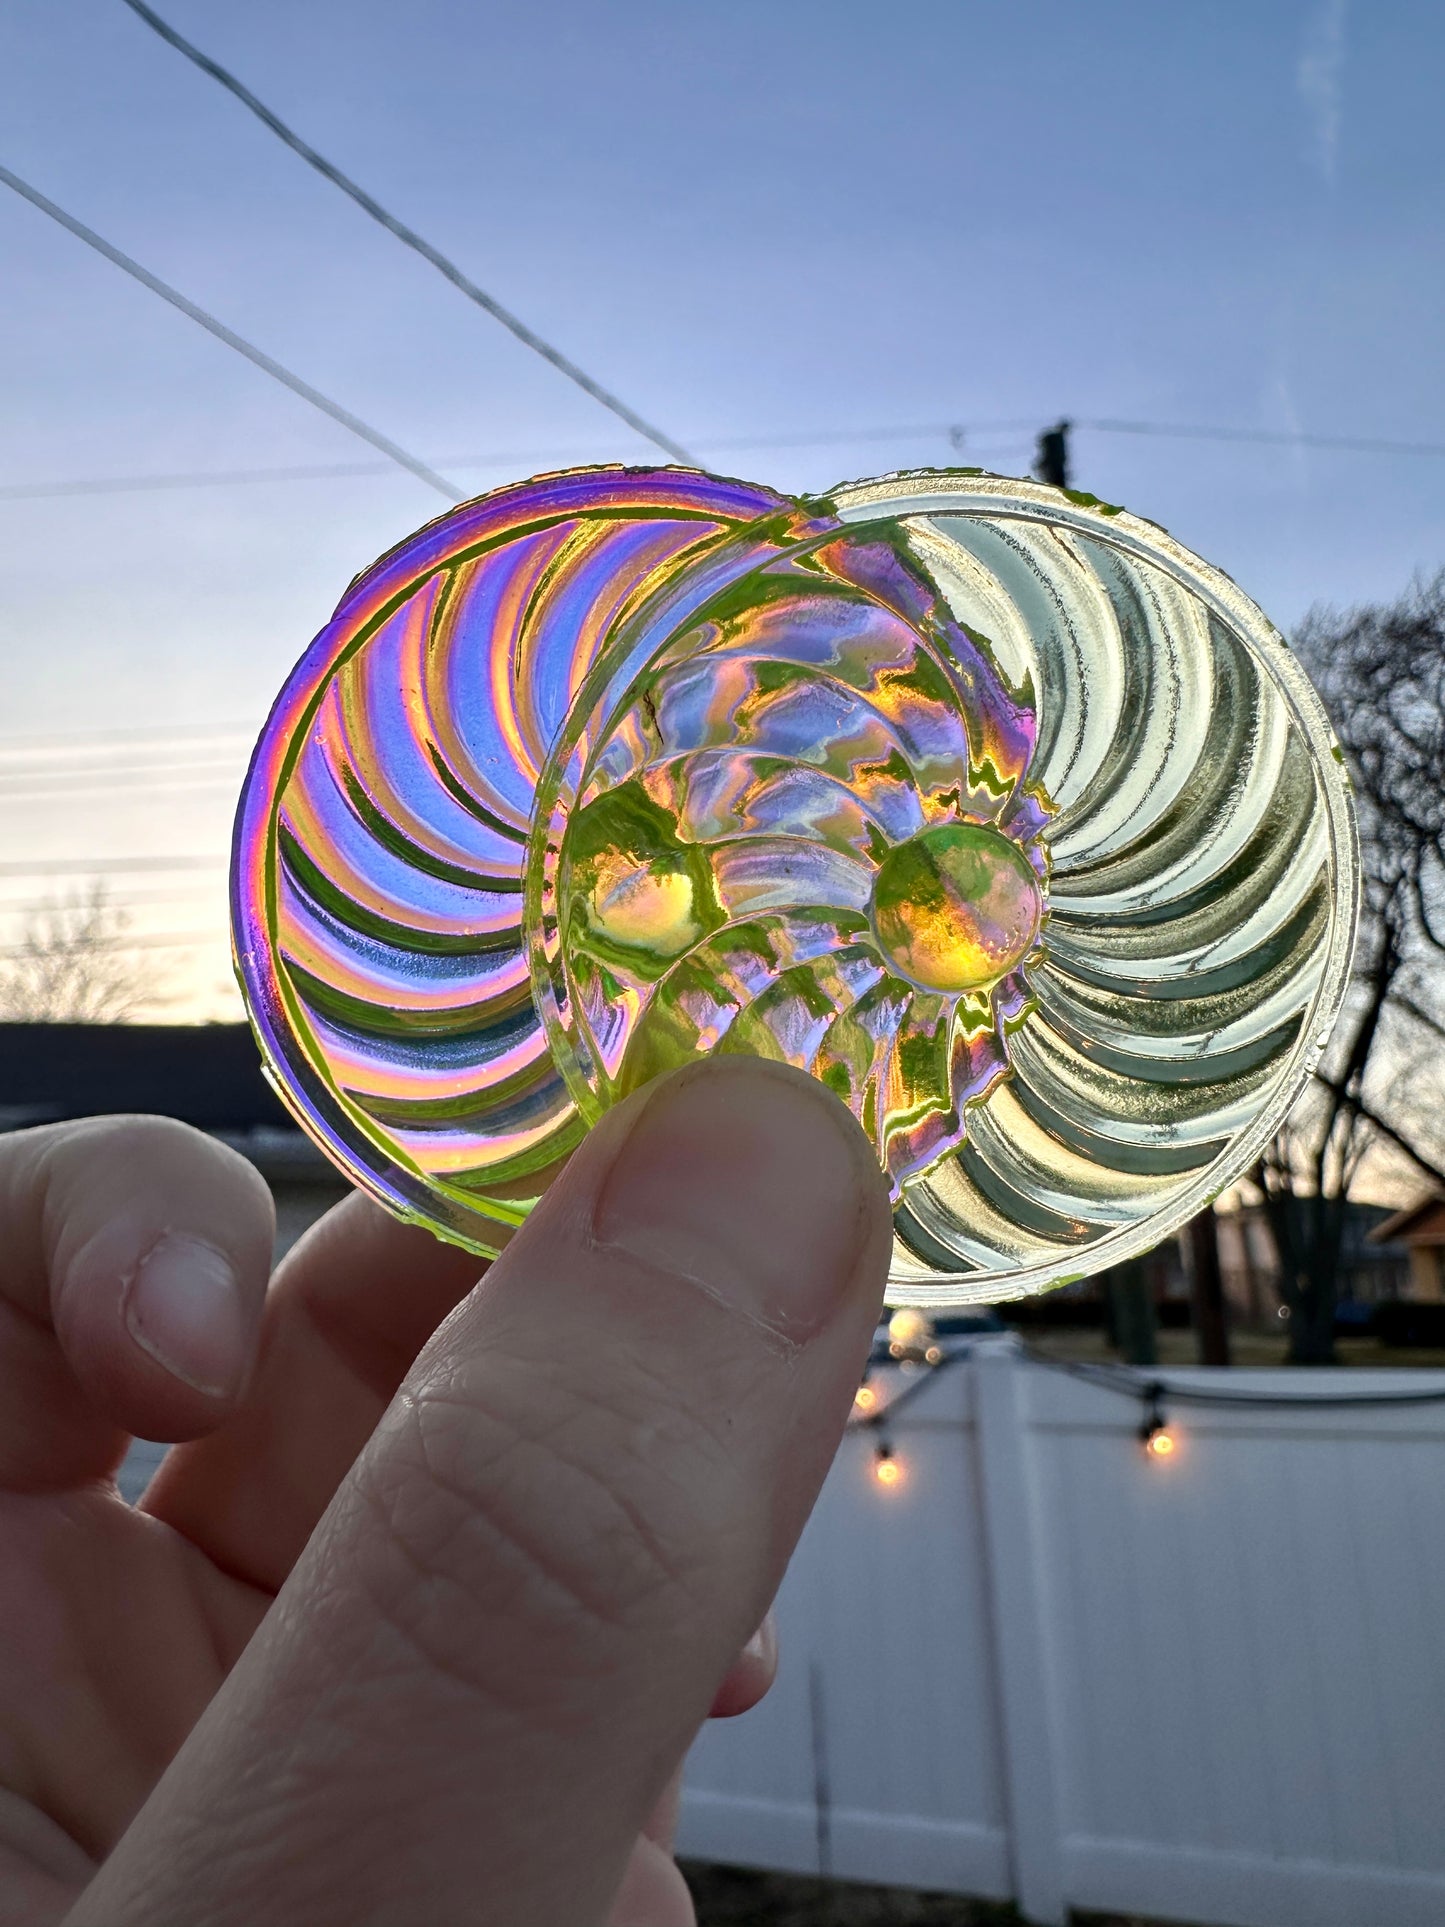 50mm Round Pinwheel in Uranium/Depression/Vaseline Glass Jewel - UV Reactive - Glows Under Blacklight